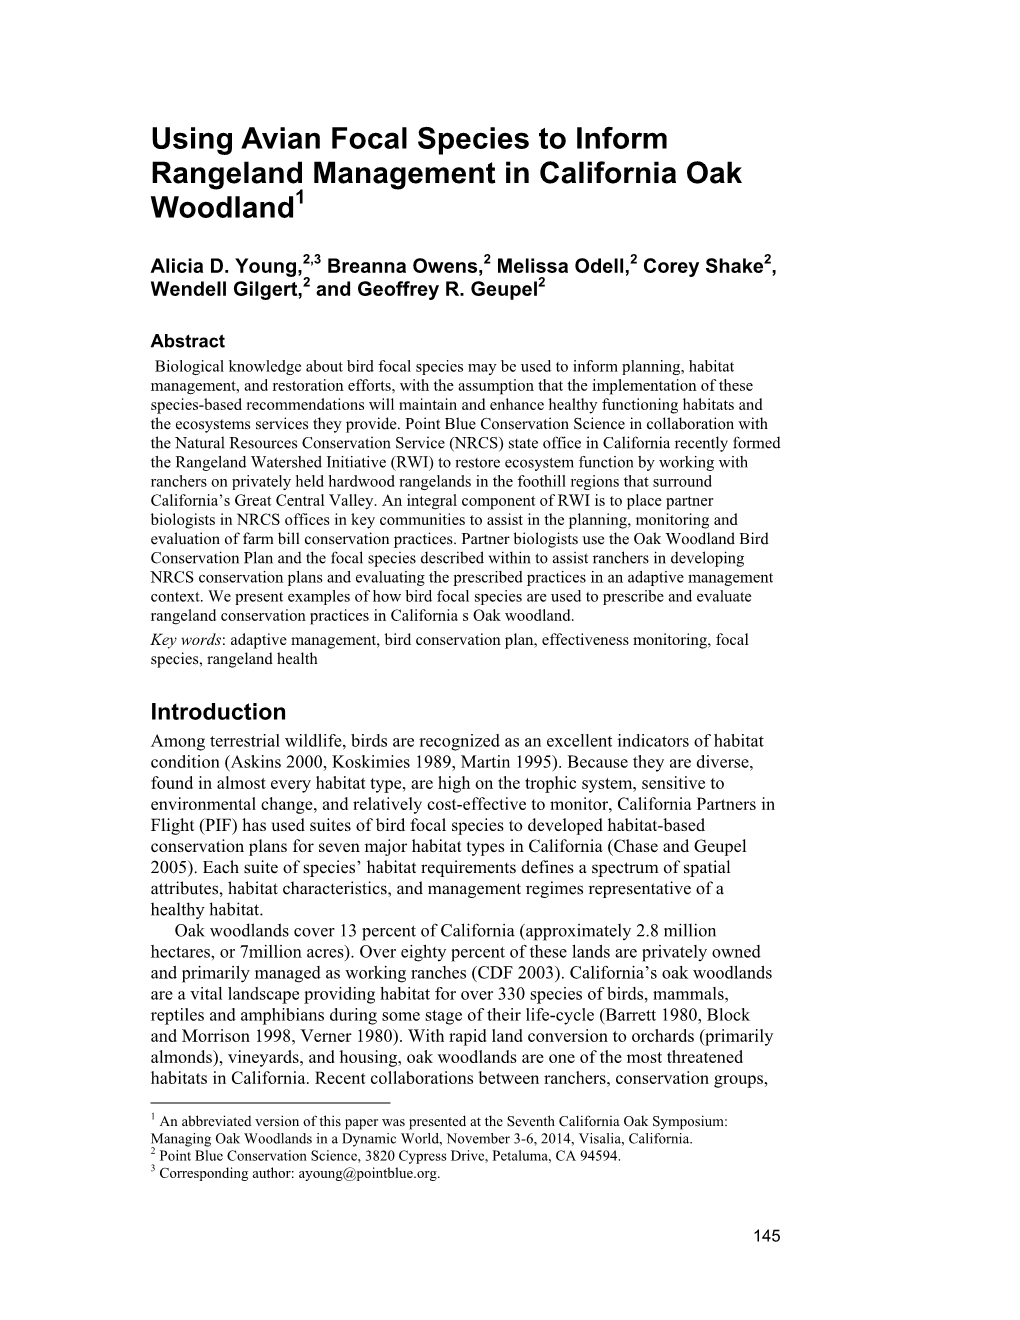 Using Avian Focal Species to Inform Rangeland Management in California Oak Woodland1